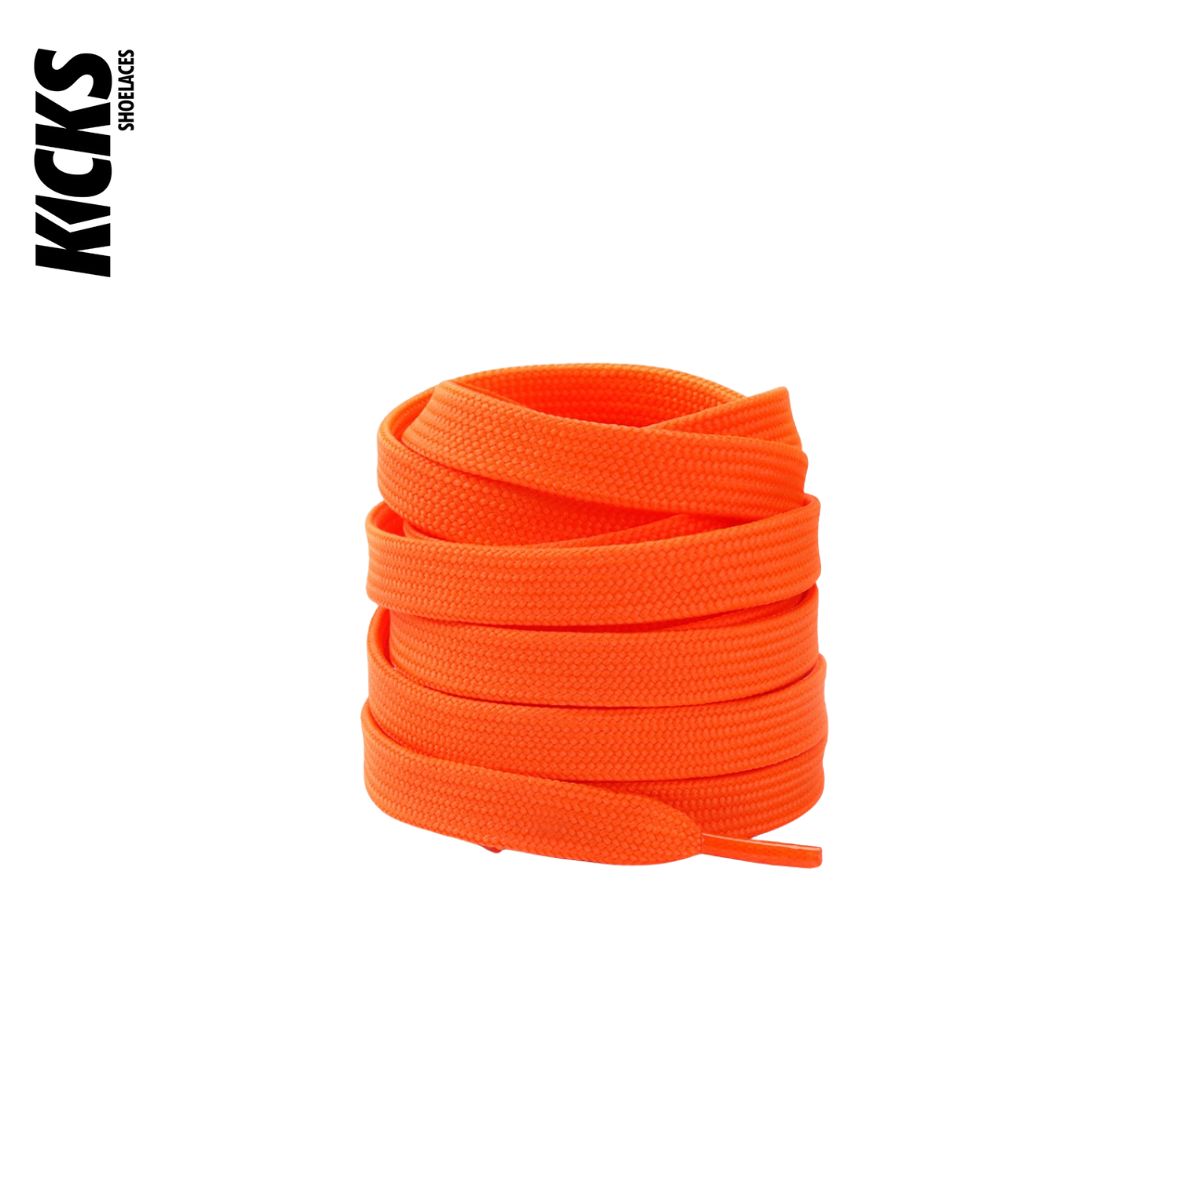 Orange Nike Dunks Shoelace Replacements